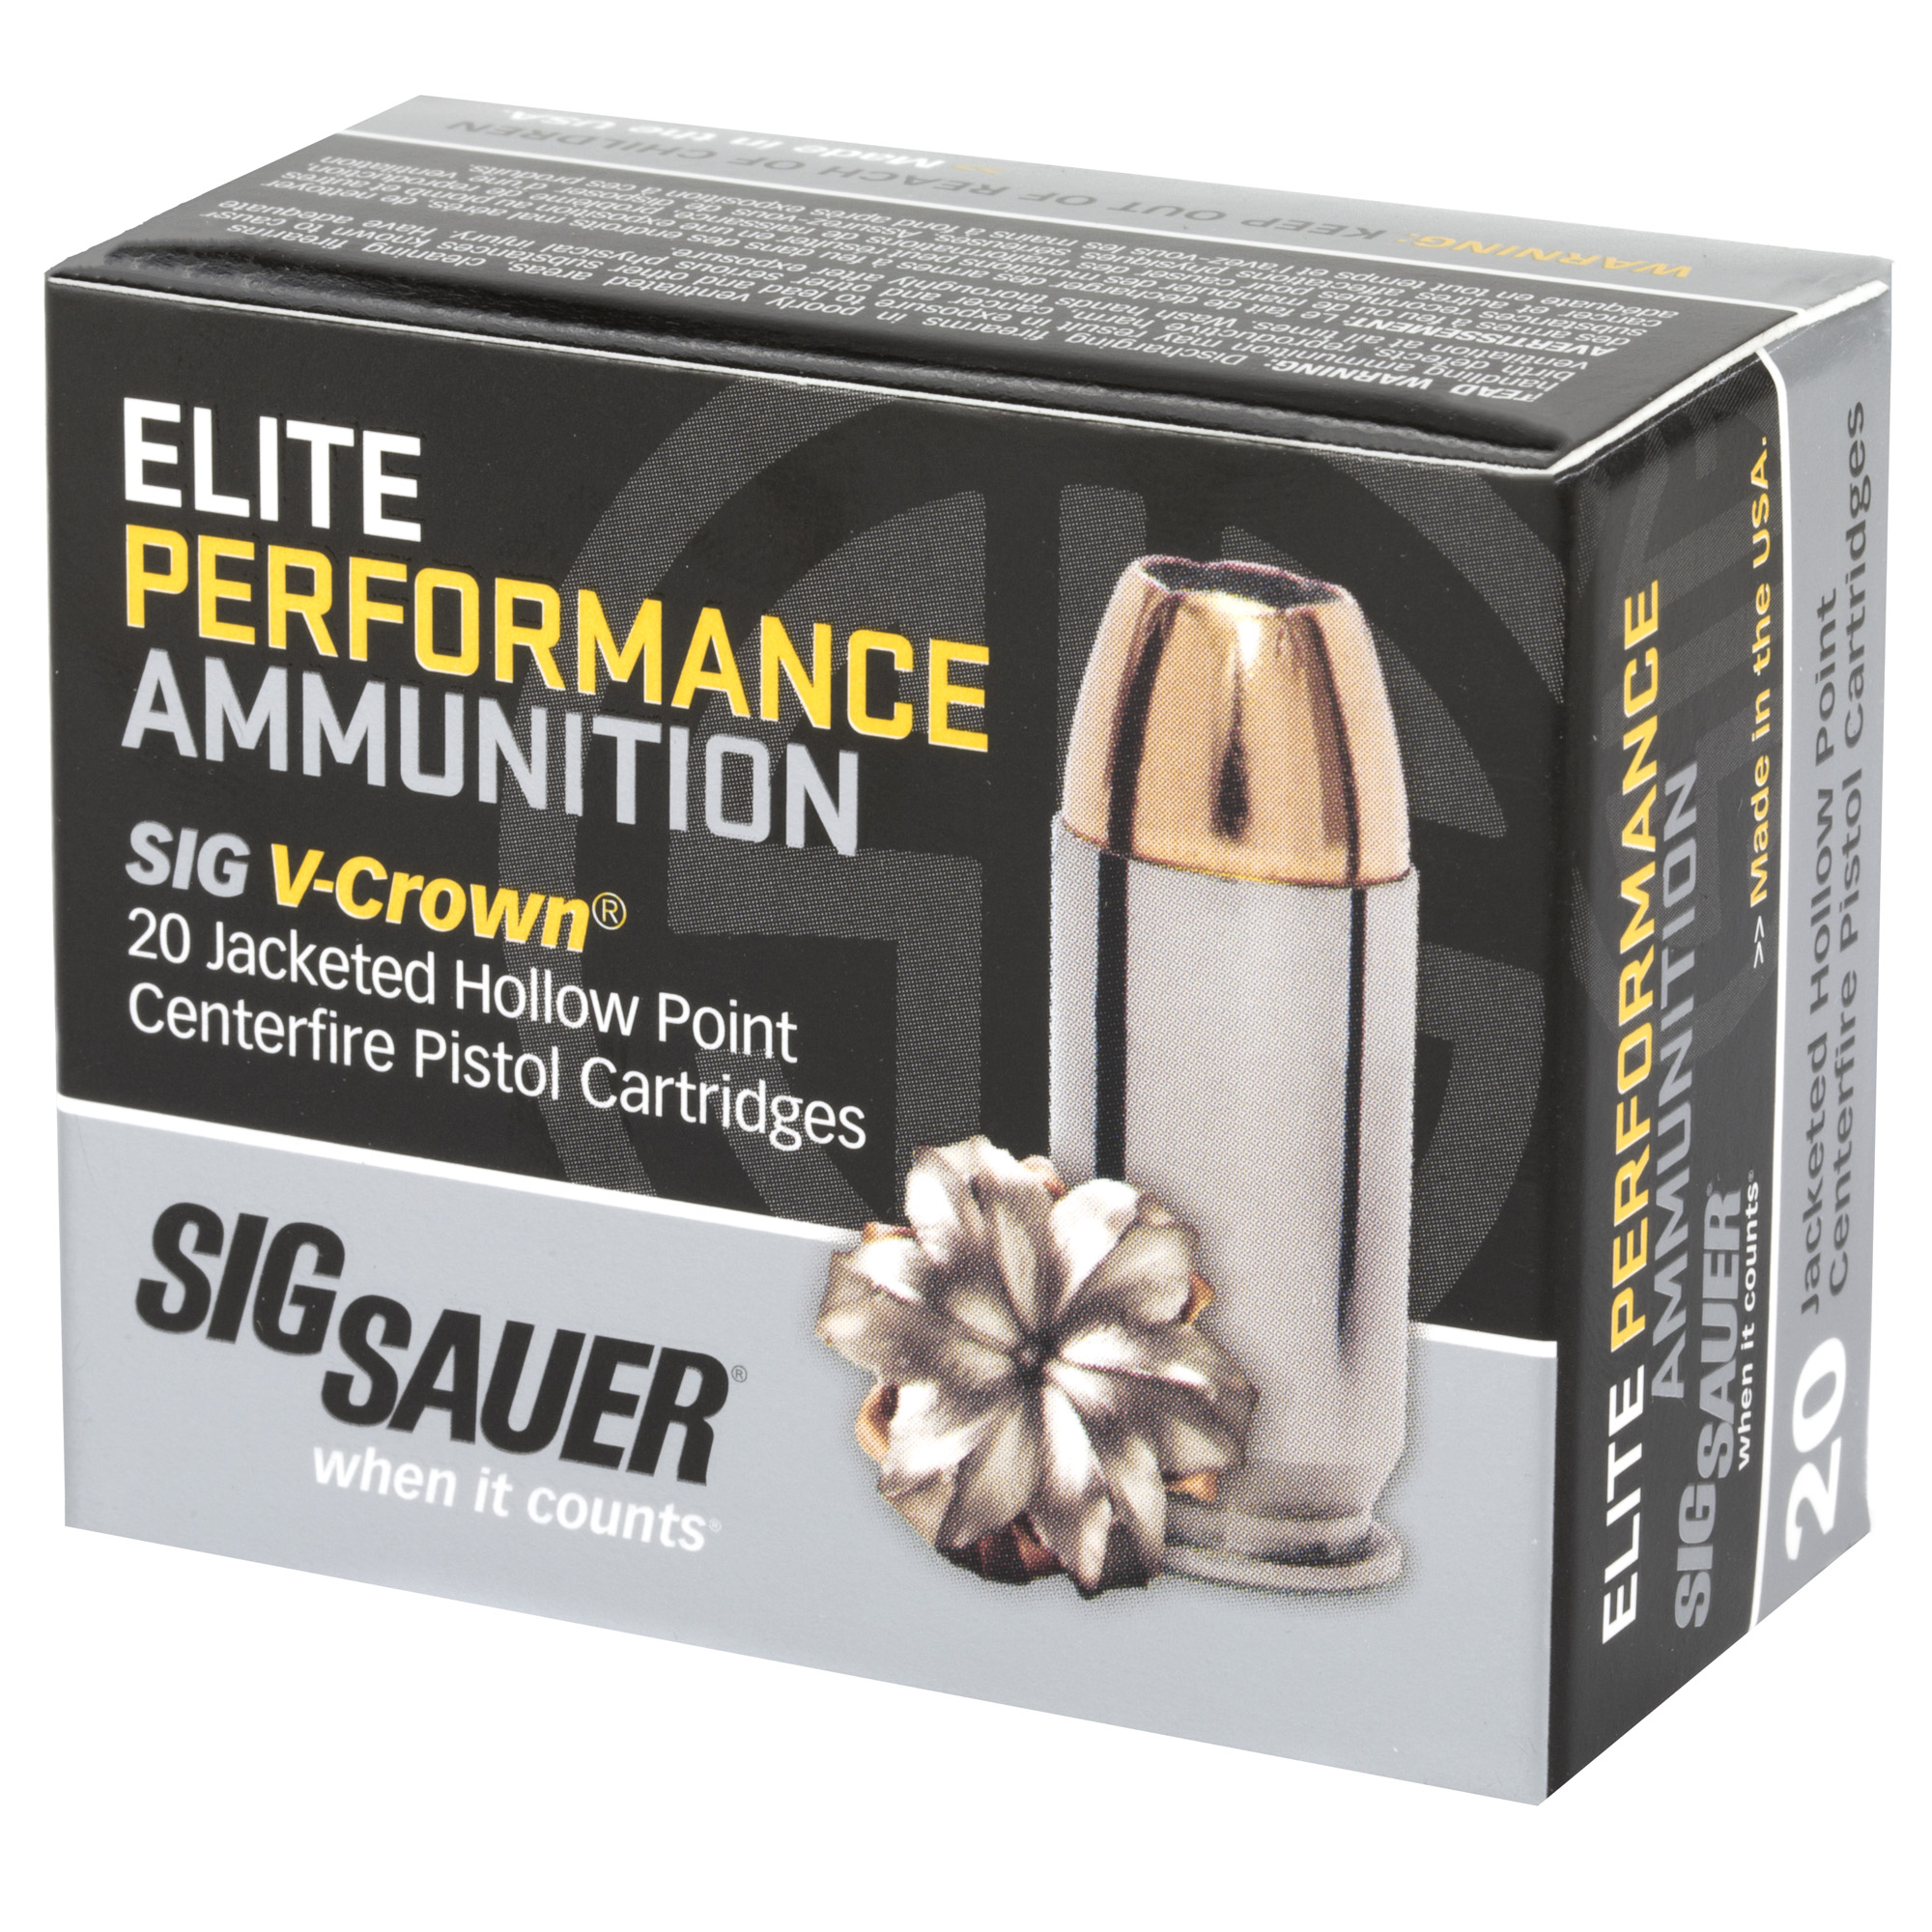 SIG Sauer Elite 9mm Luger V-Crown JHP Ammo 115 Grain MPN # E9MMA1-20, UPC: 798681501724,